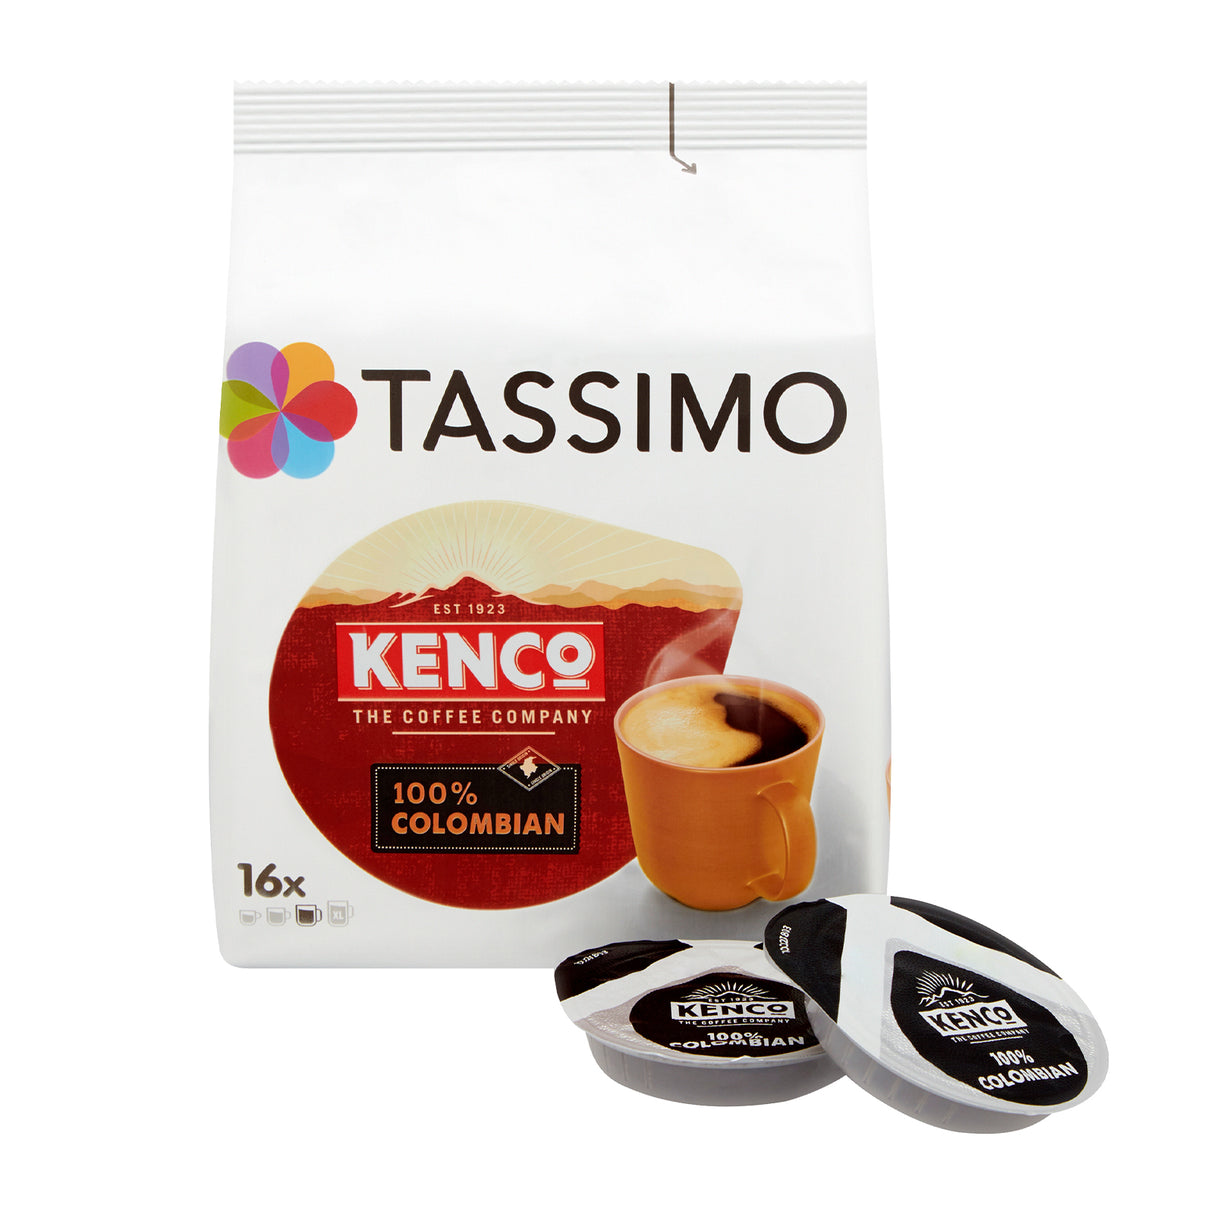 Tassimo Kenco Colombian Coffee Pods Case